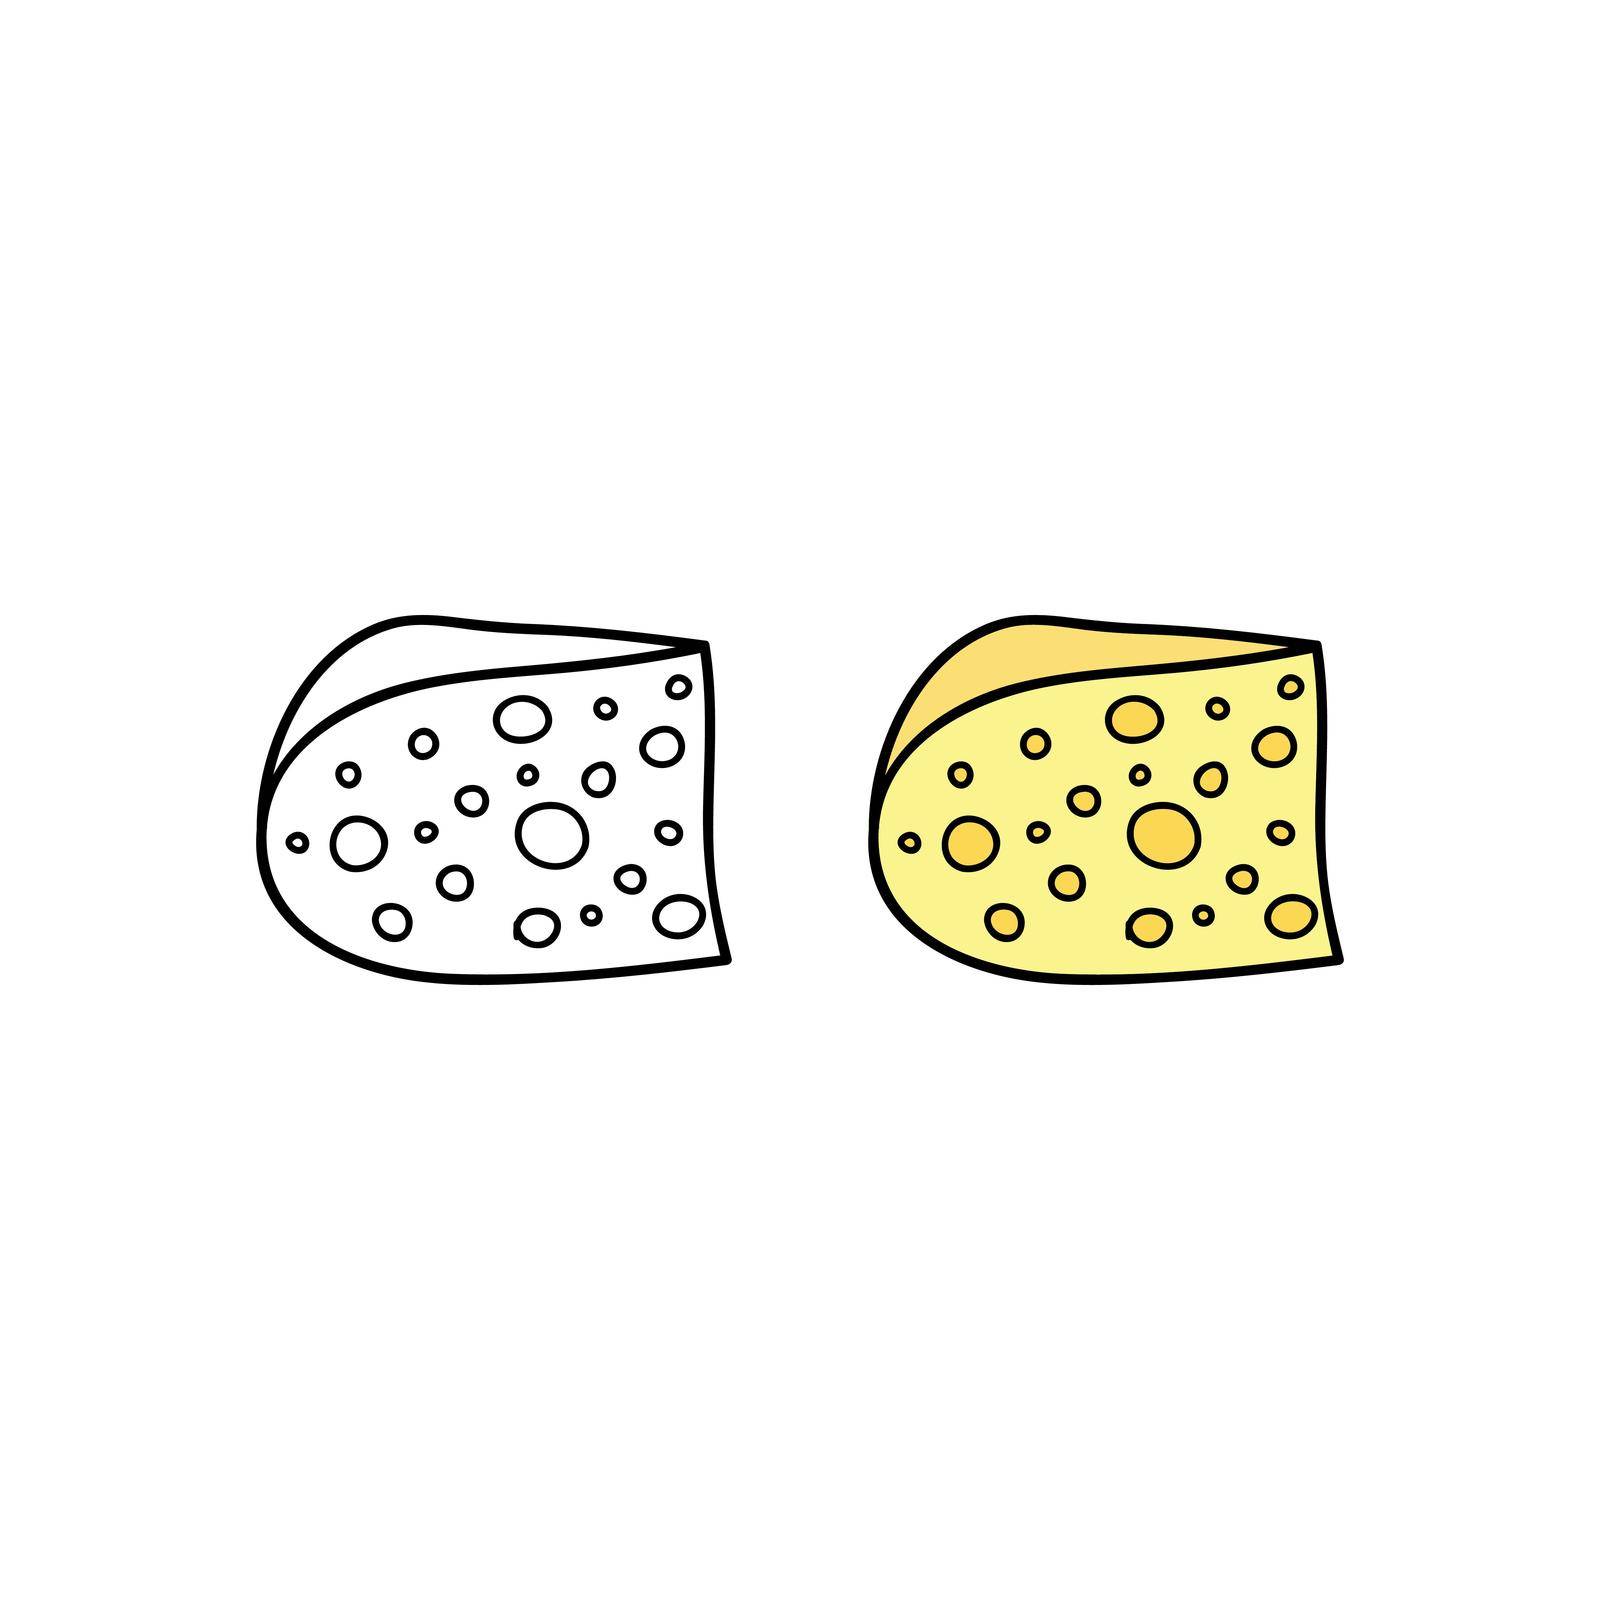 Hand drawn cheese. by Minur